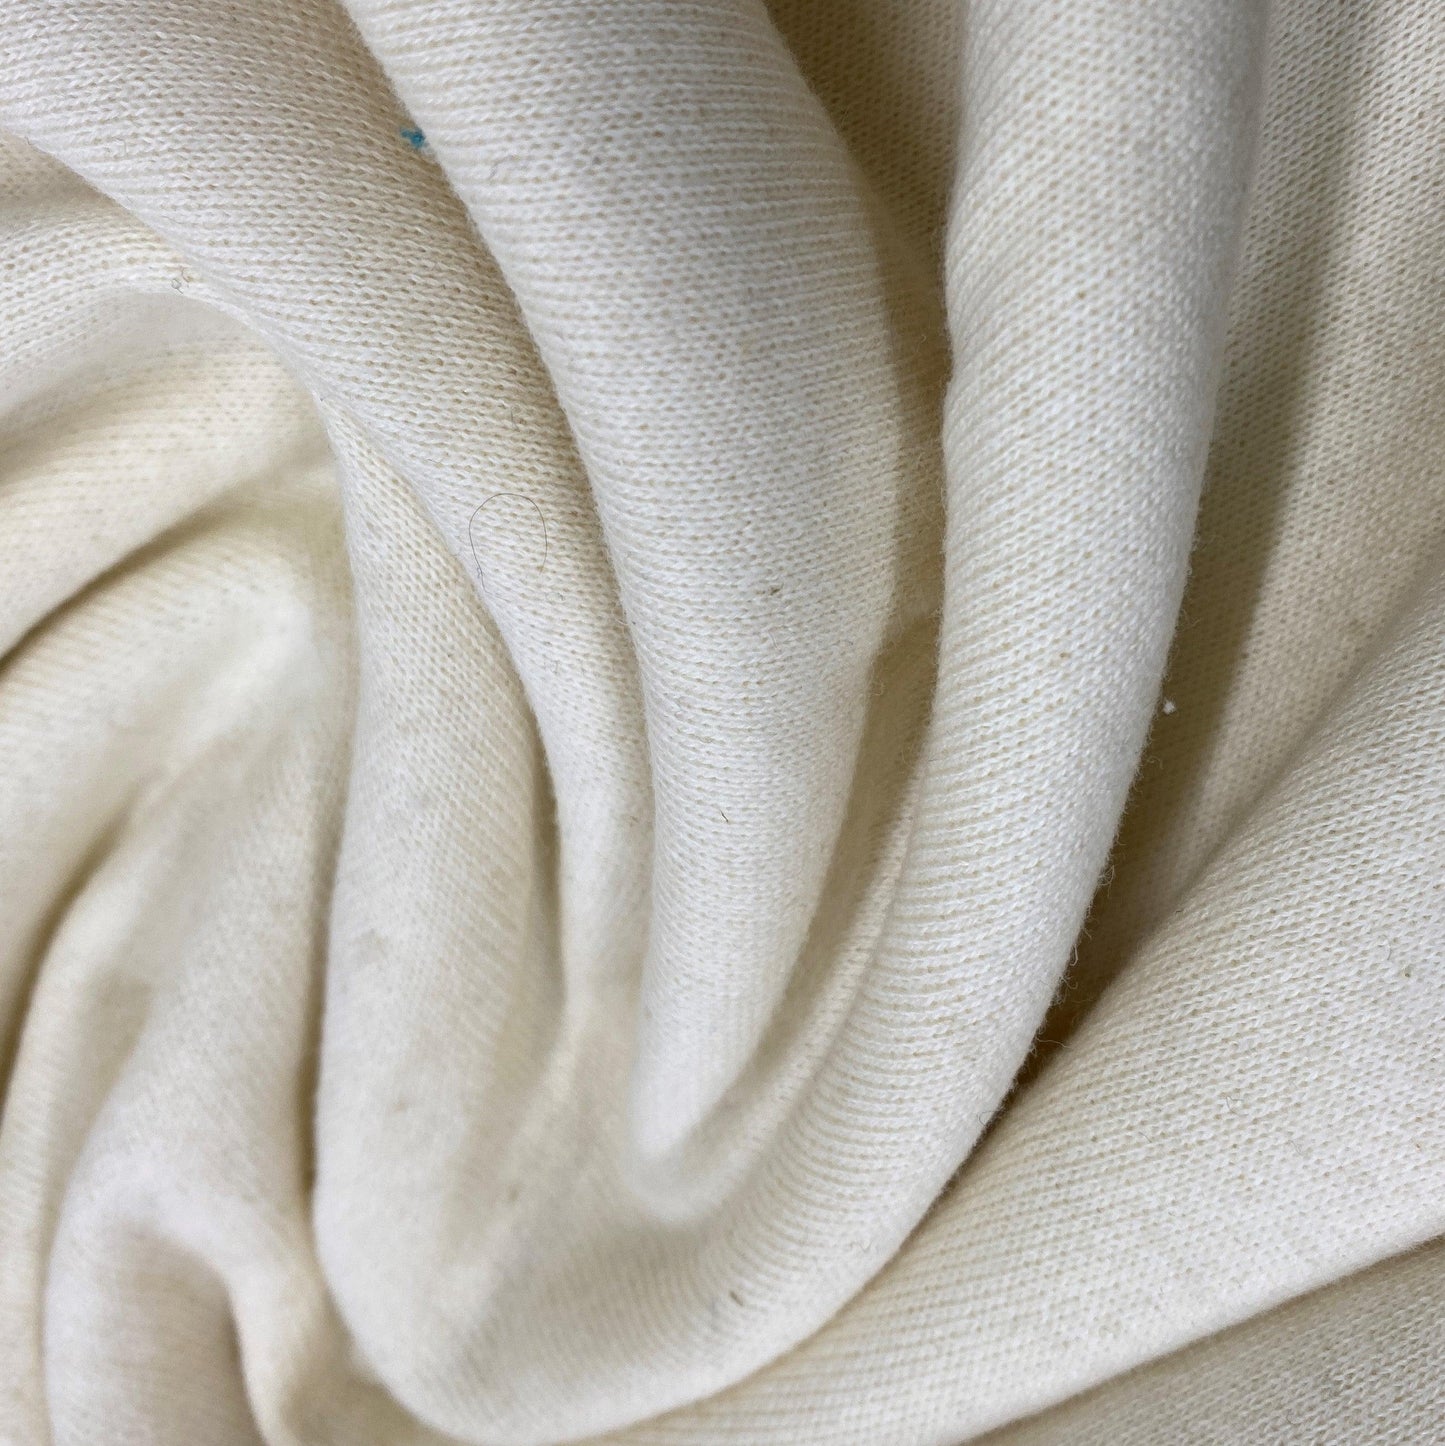 Cotton Fleece Fabric Suppliers 22206300 - Wholesale Manufacturers